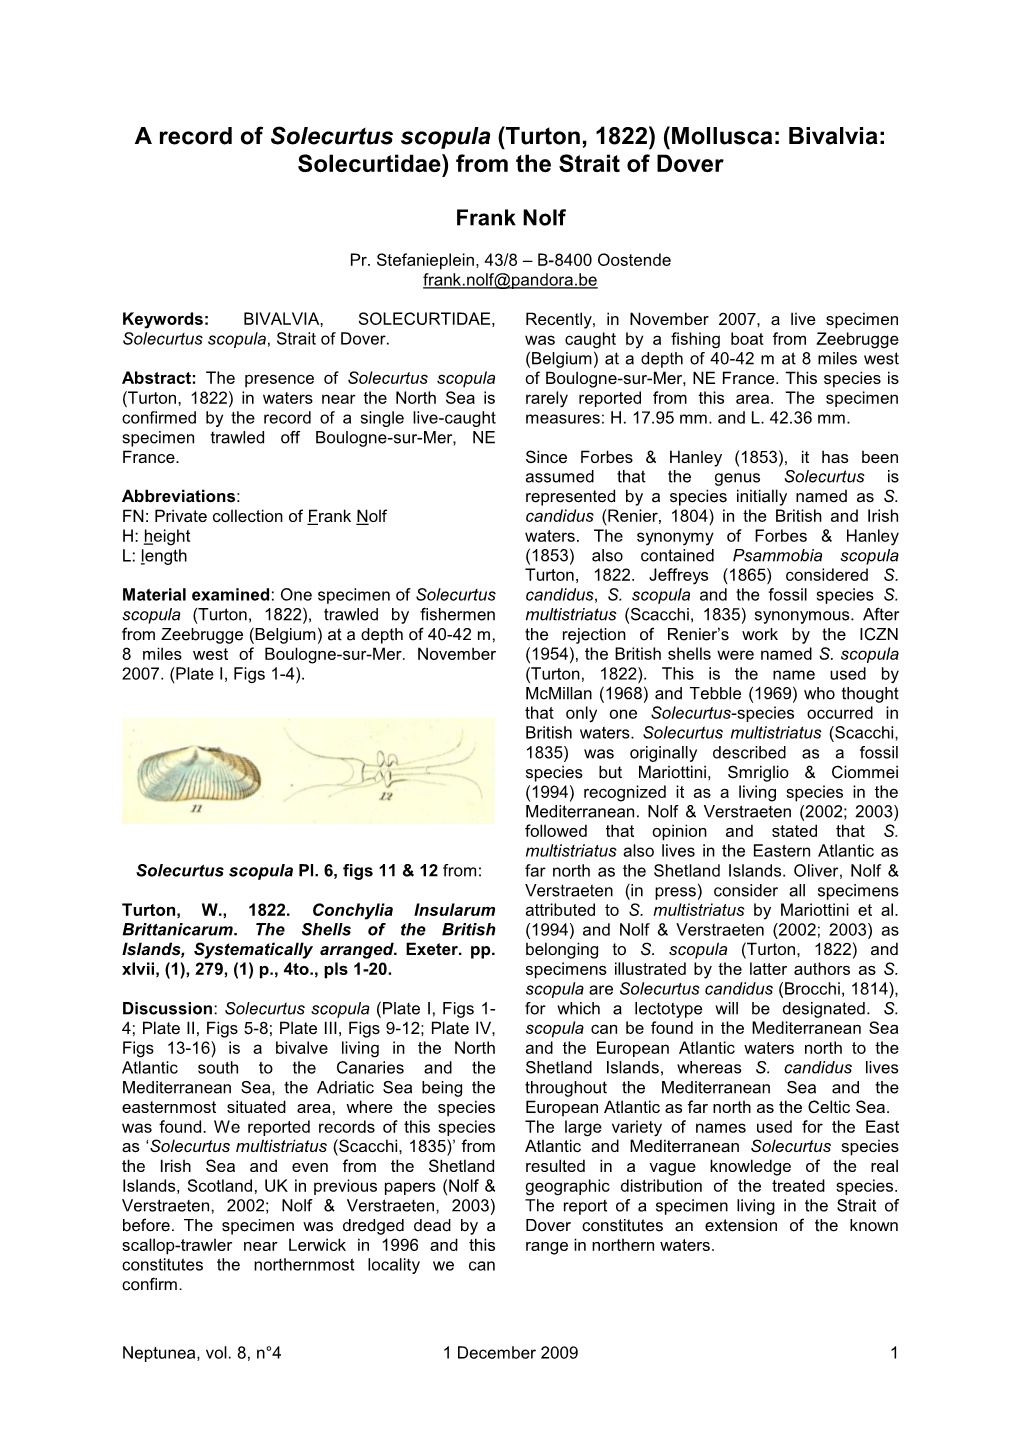 A Record of Solecurtus Scopula (Turton, 1822) (Mollusca: Bivalvia: Solecurtidae) from the Strait of Dover